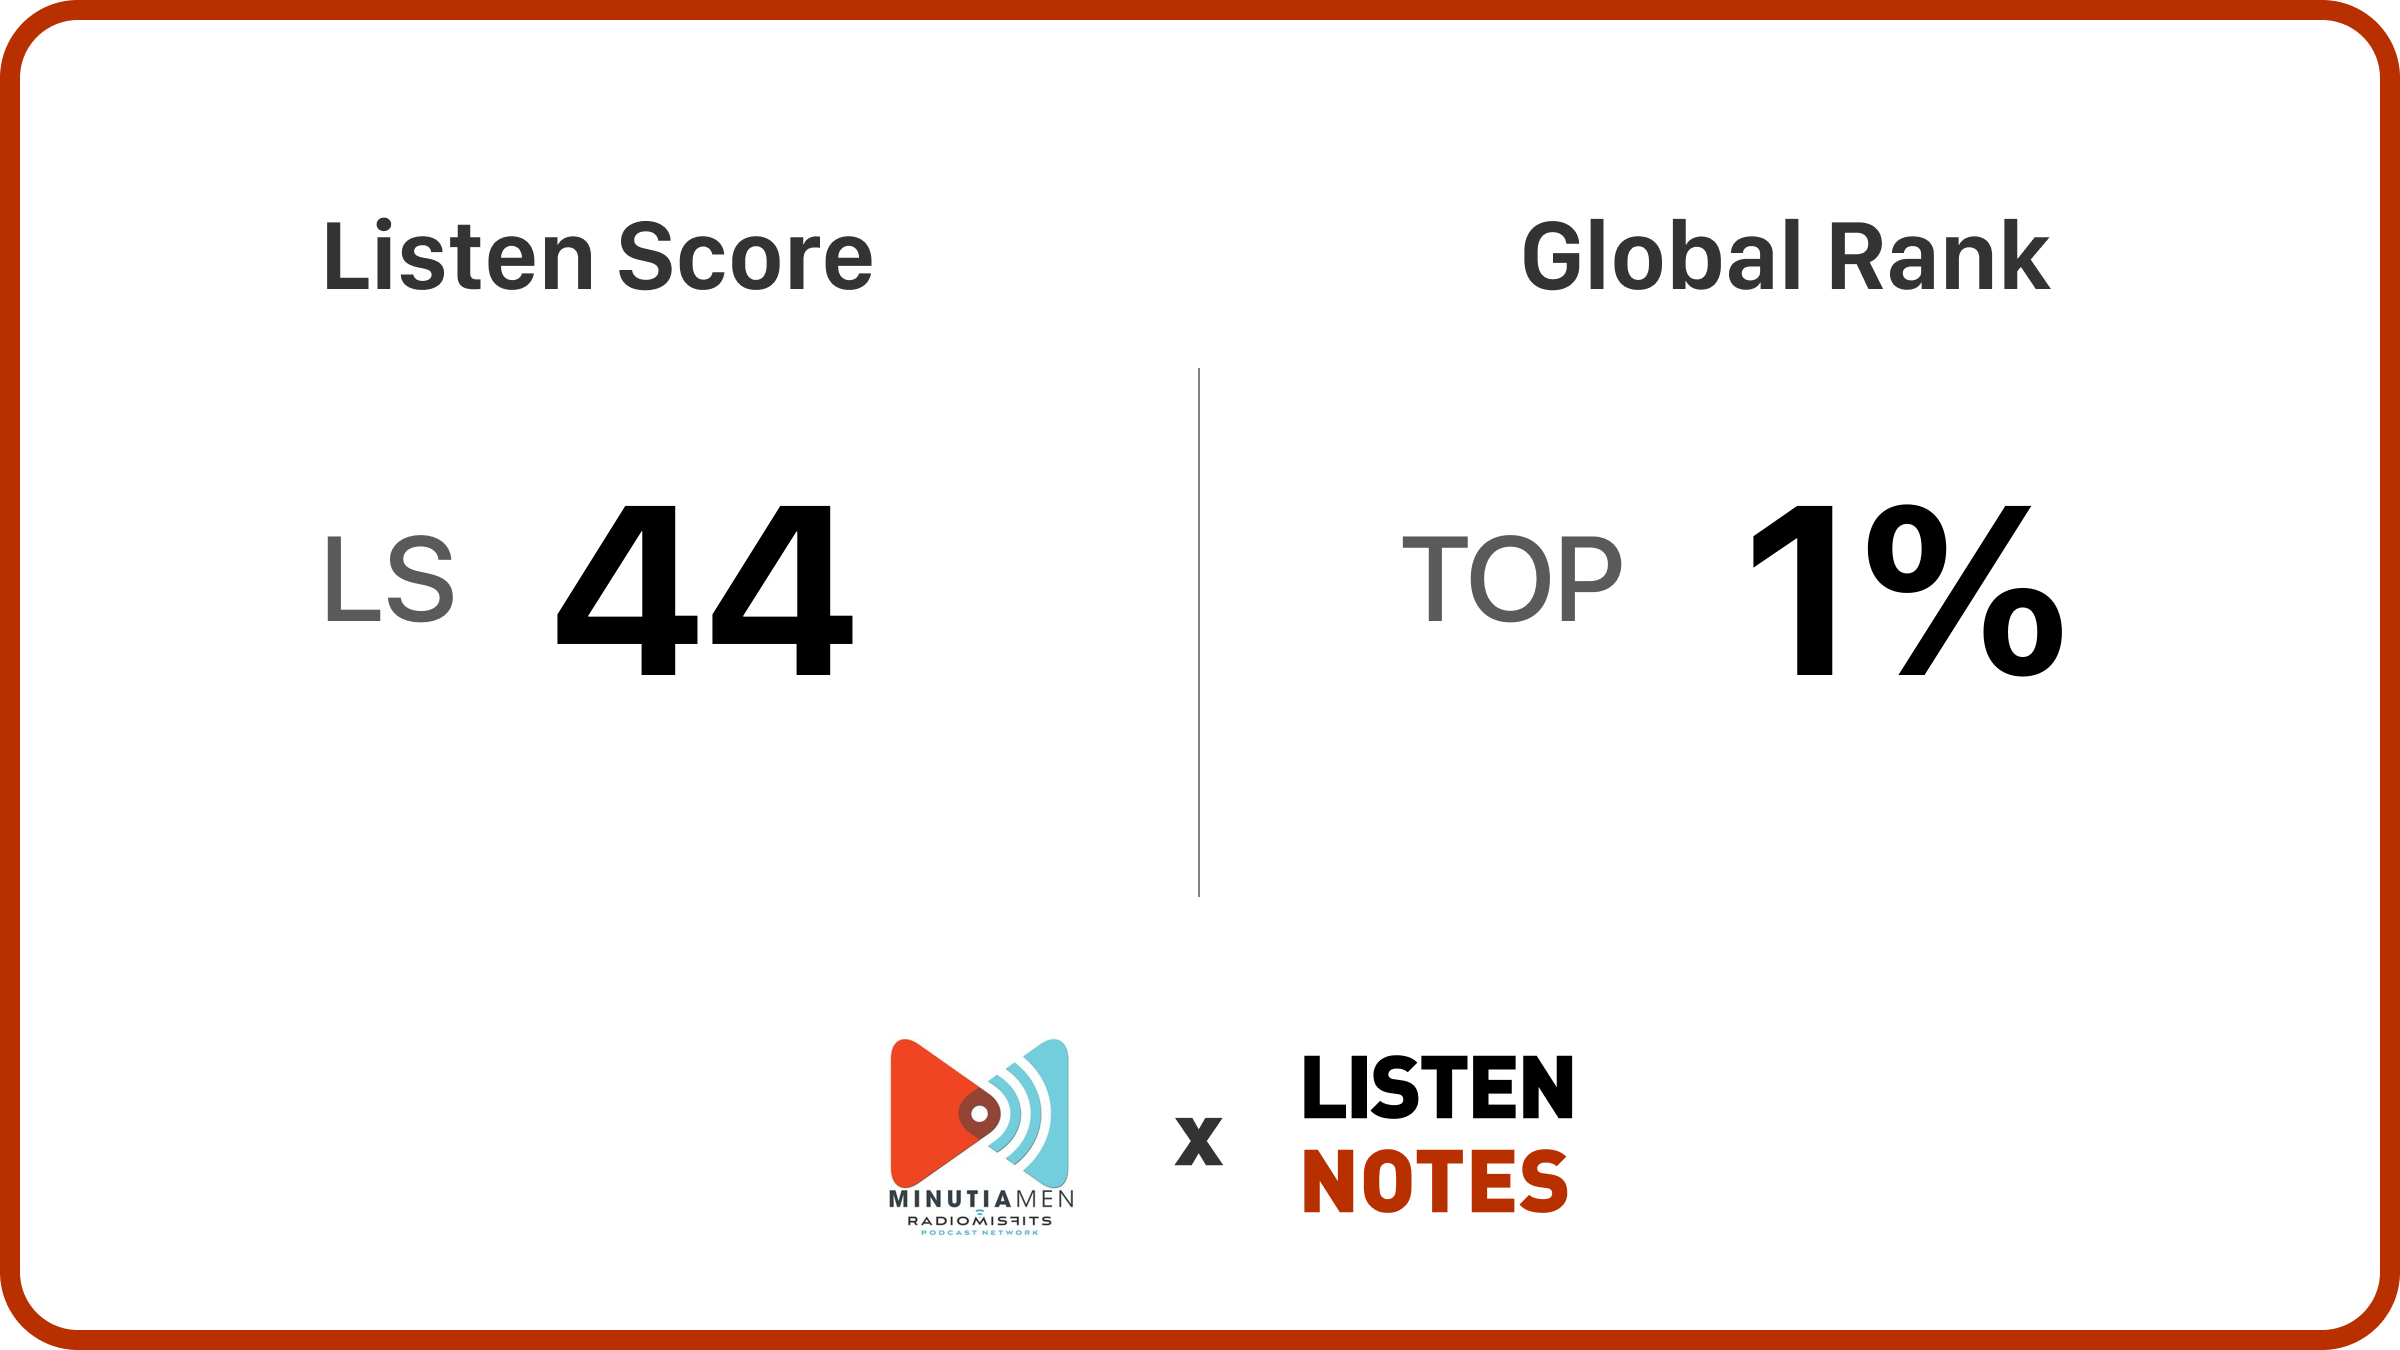 Listen Score and Global Rank